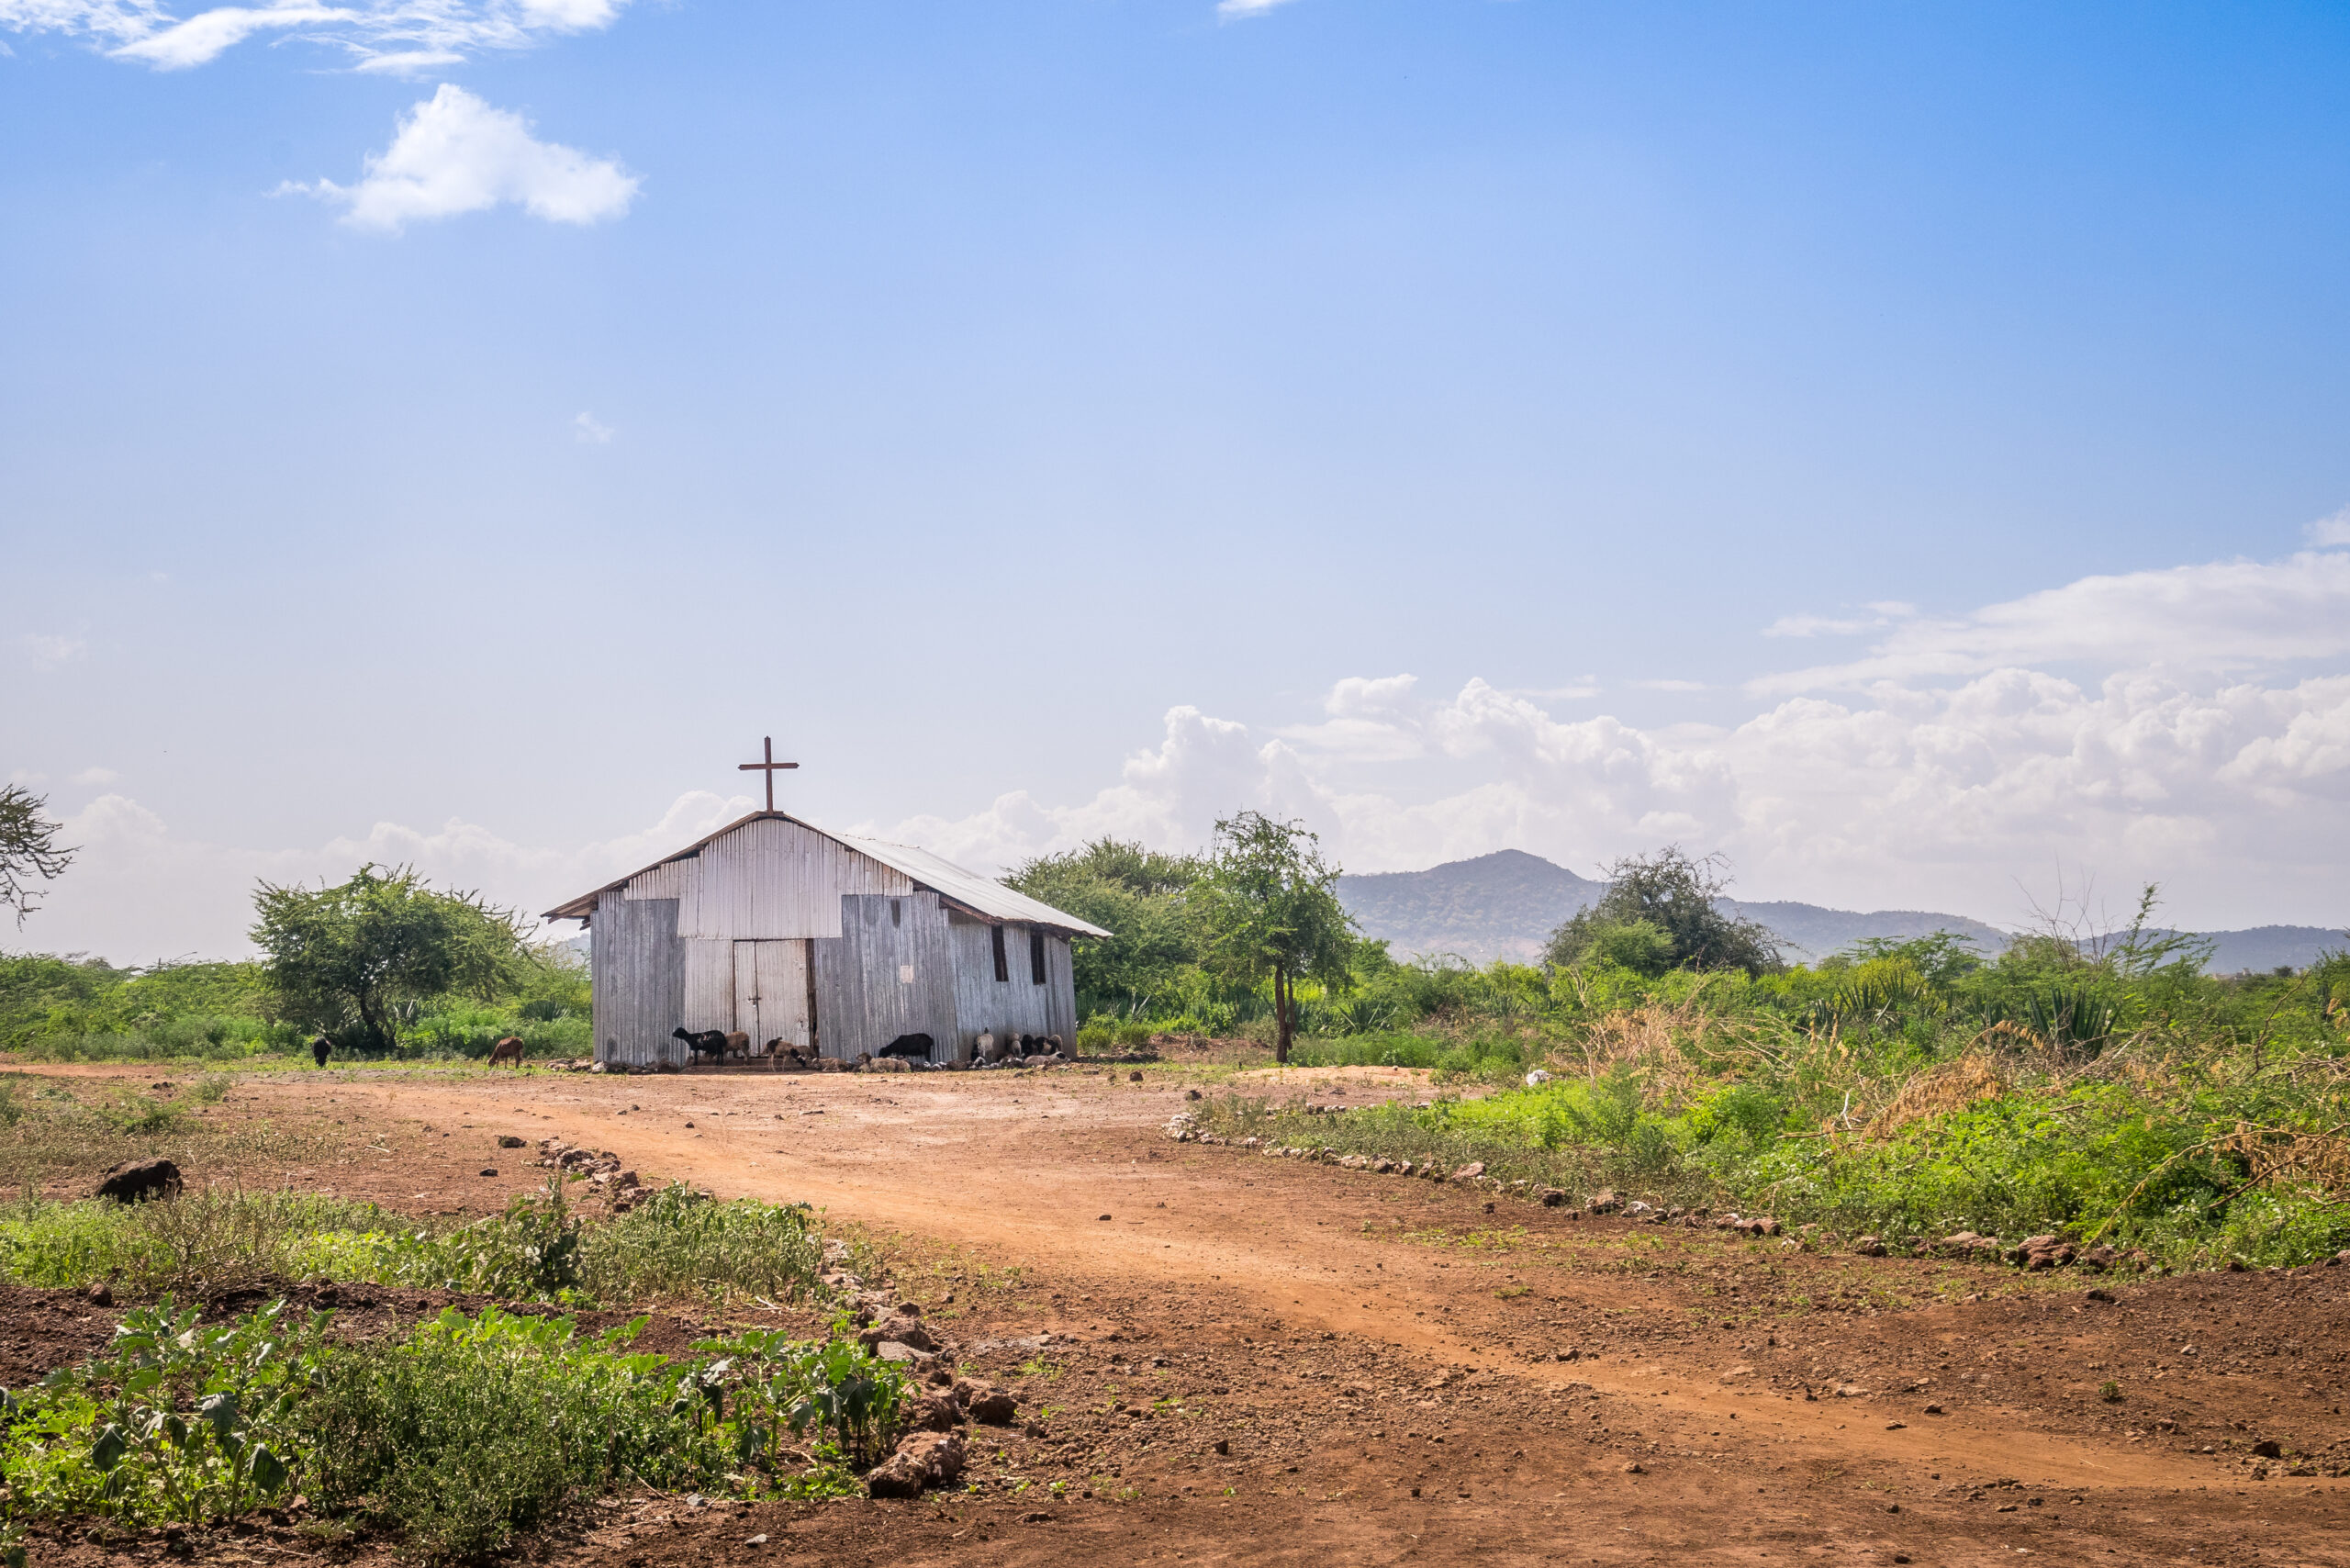 Small christian church in rural african area, Kenya